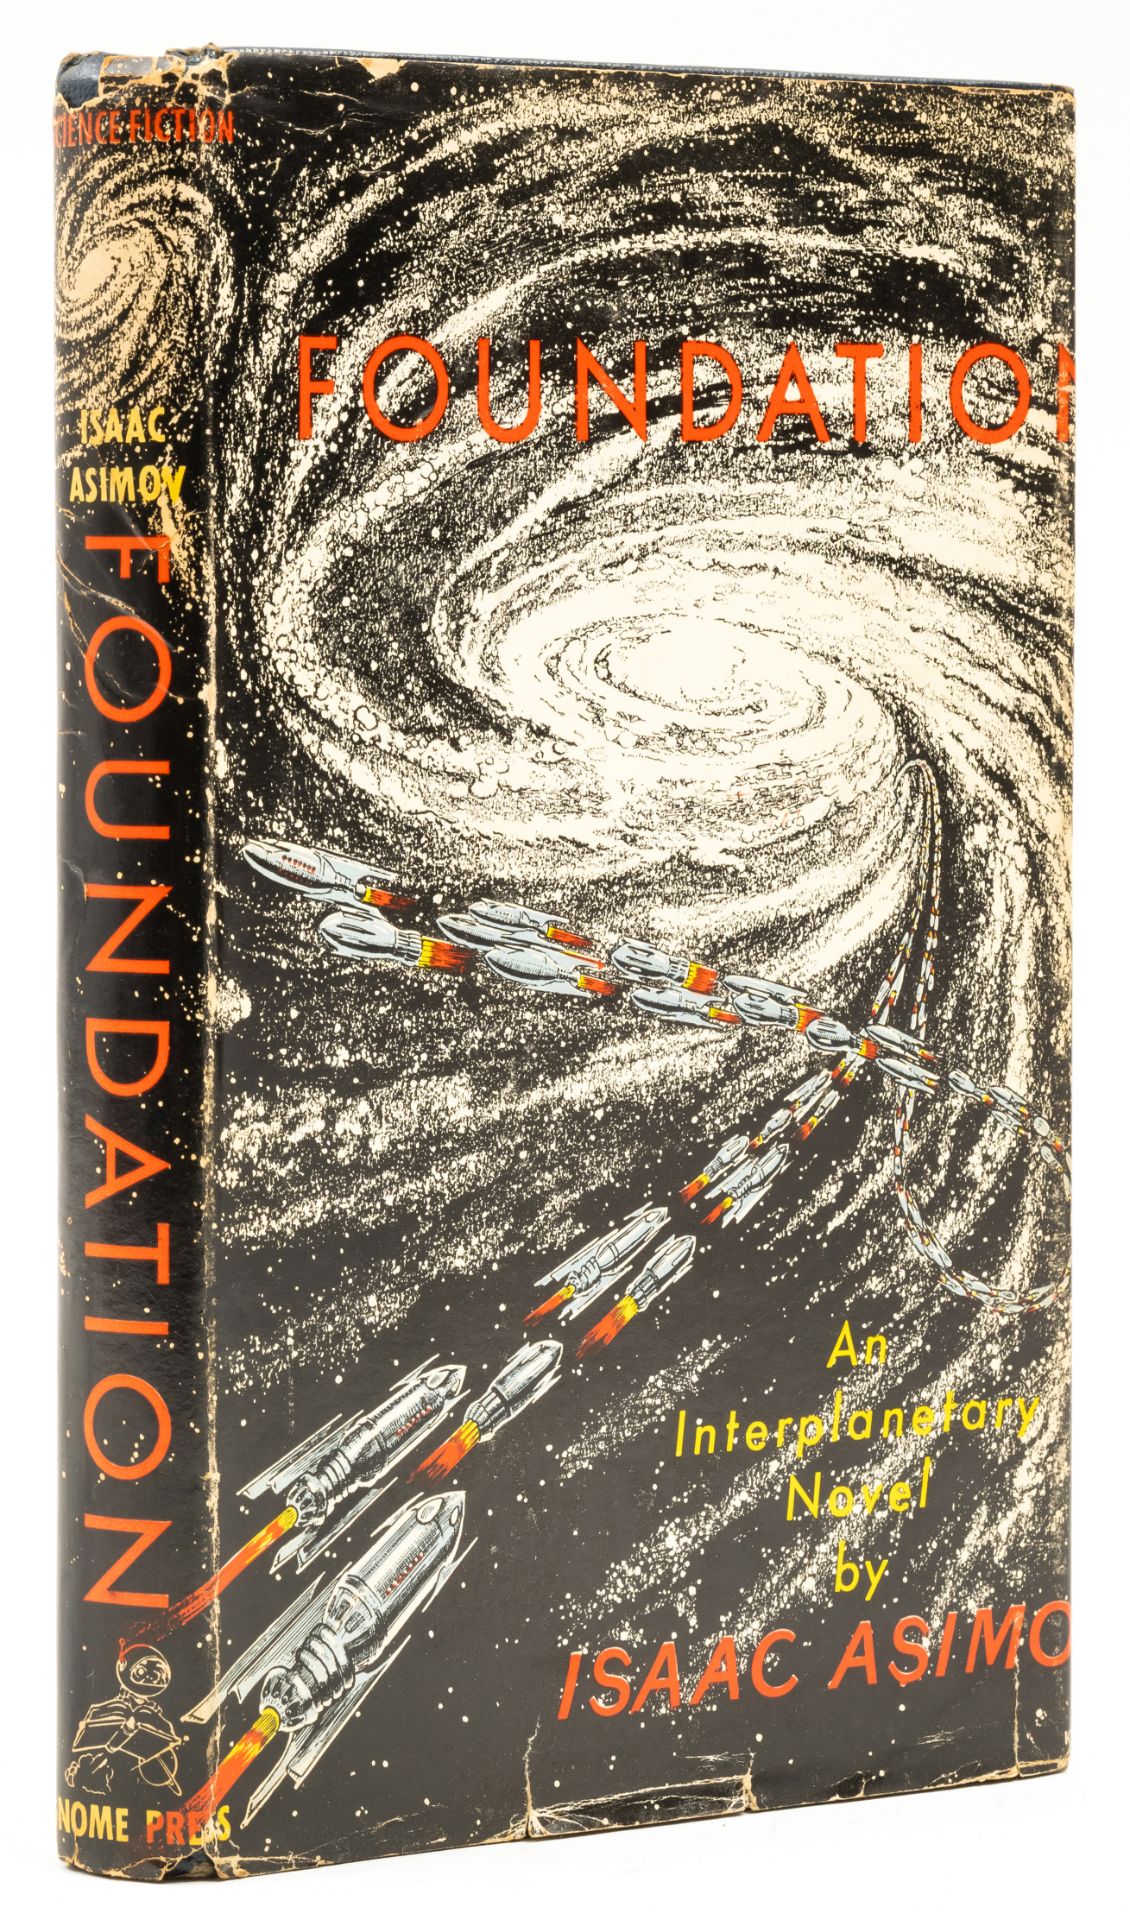 Asimov (Isaac) Foundation, first edition, New York, 1951.